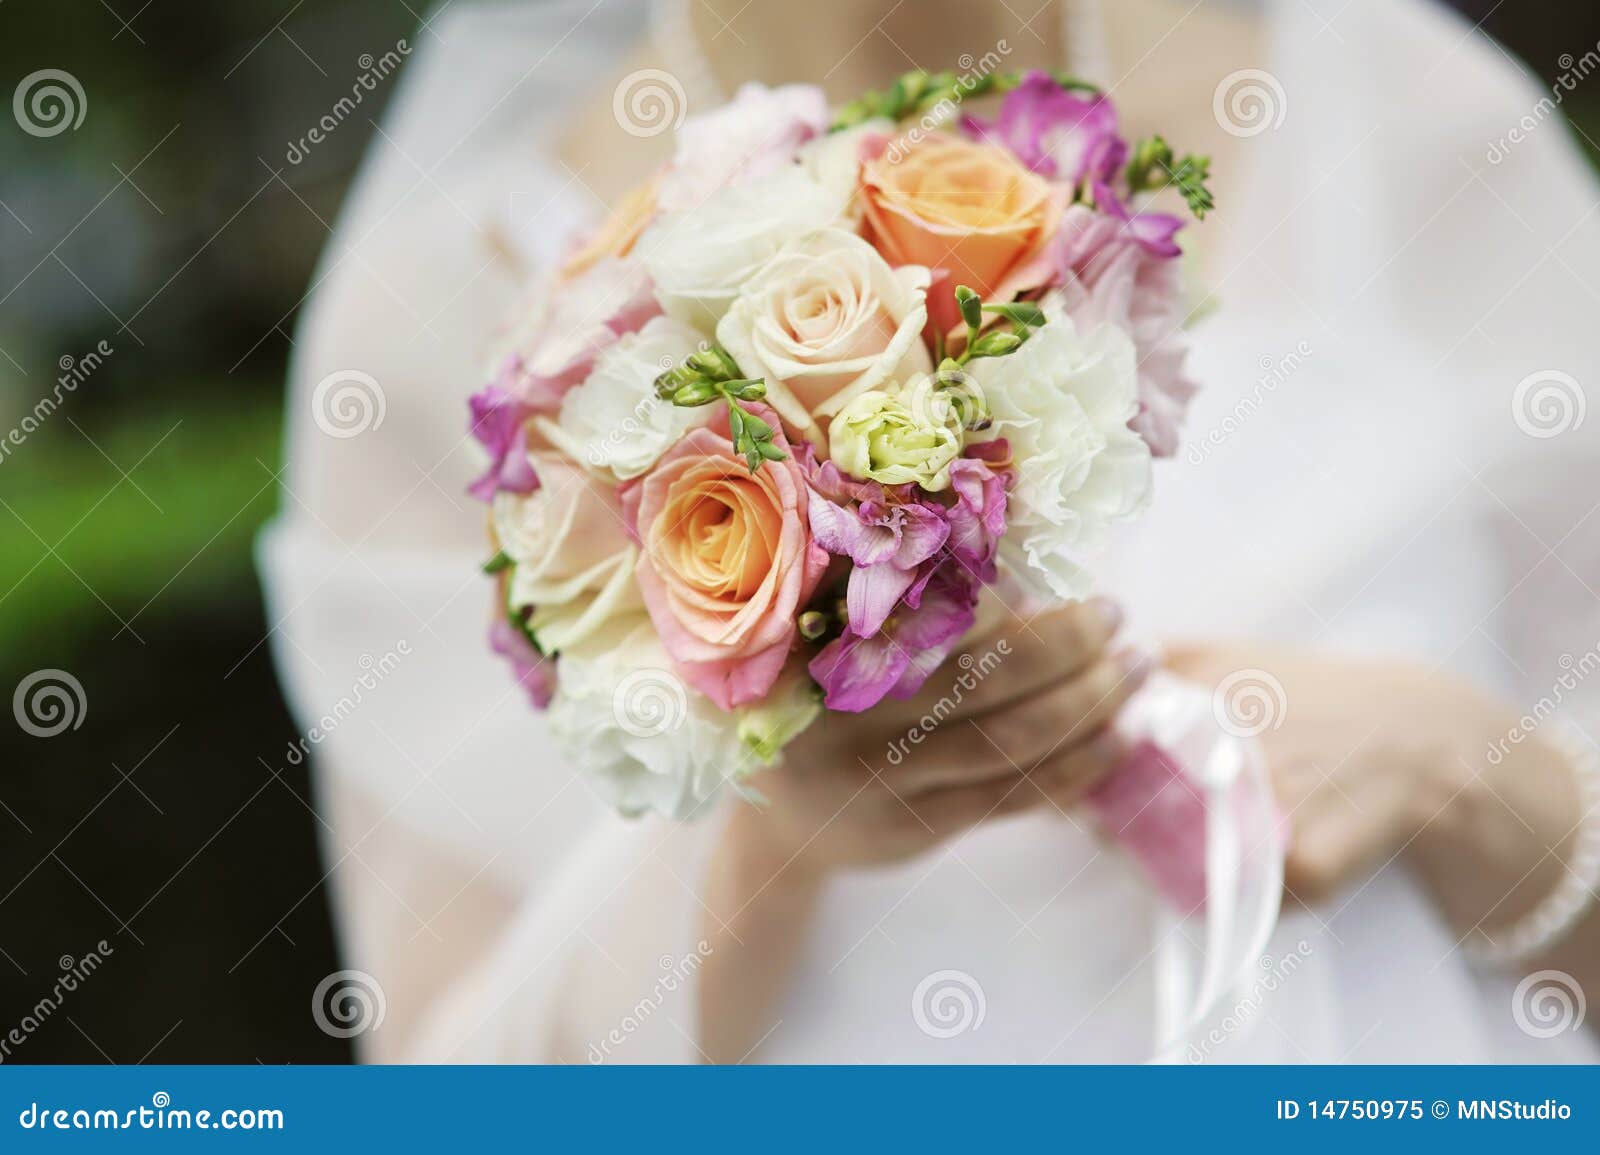 Bride Holding Beautiful Pink Wedding Flowers Stock Image - Image of ...